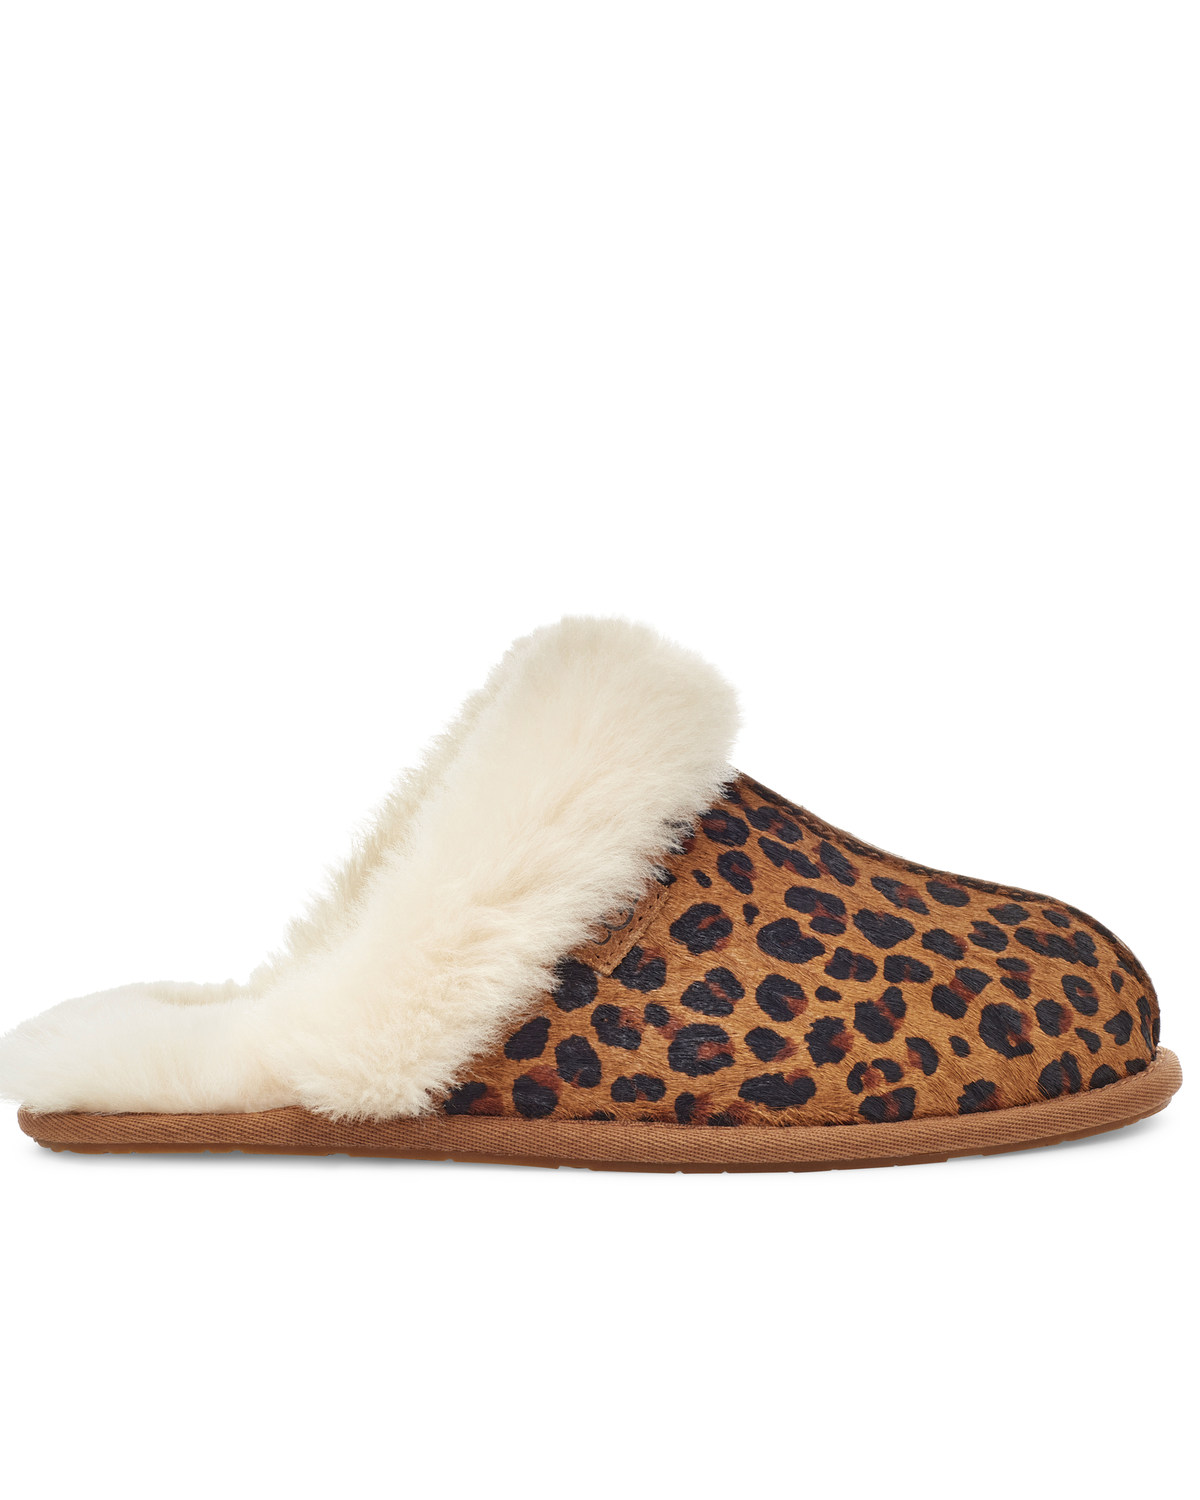 white leopard ugg slippers